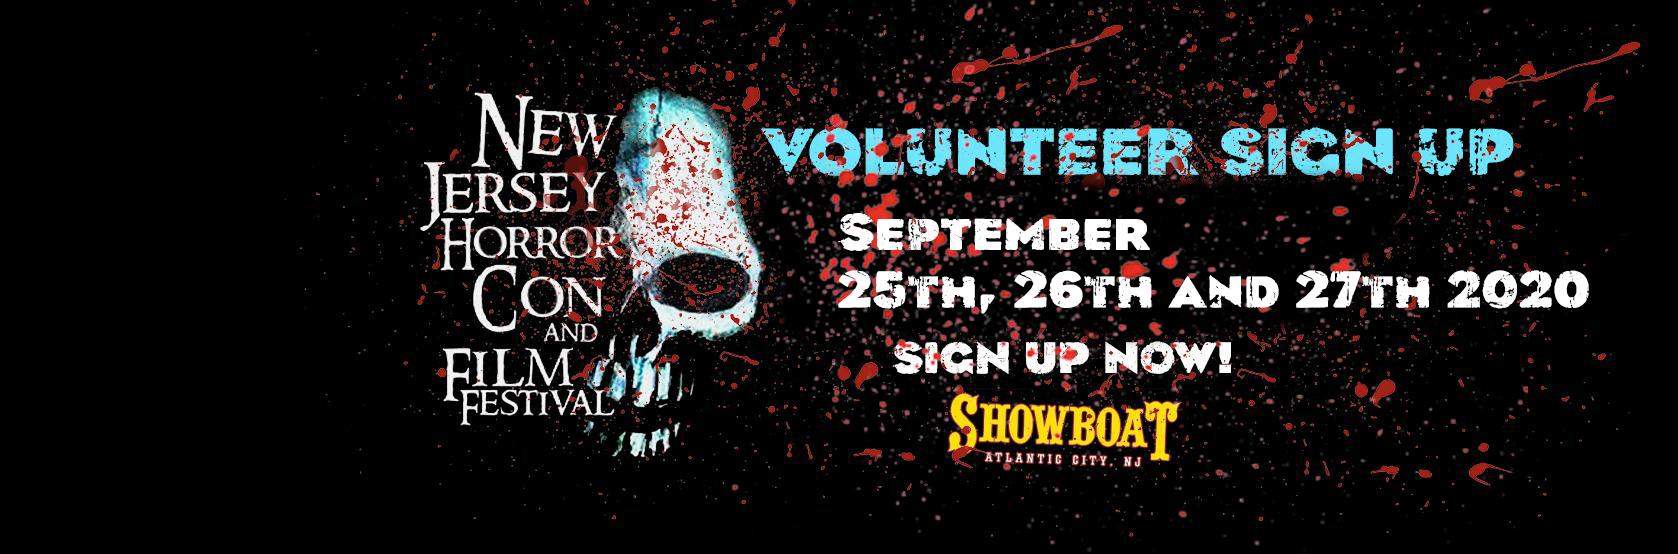 Volunteer Registration SEPTEMBER 2020 - New Jersey Horror Con and Film Festival